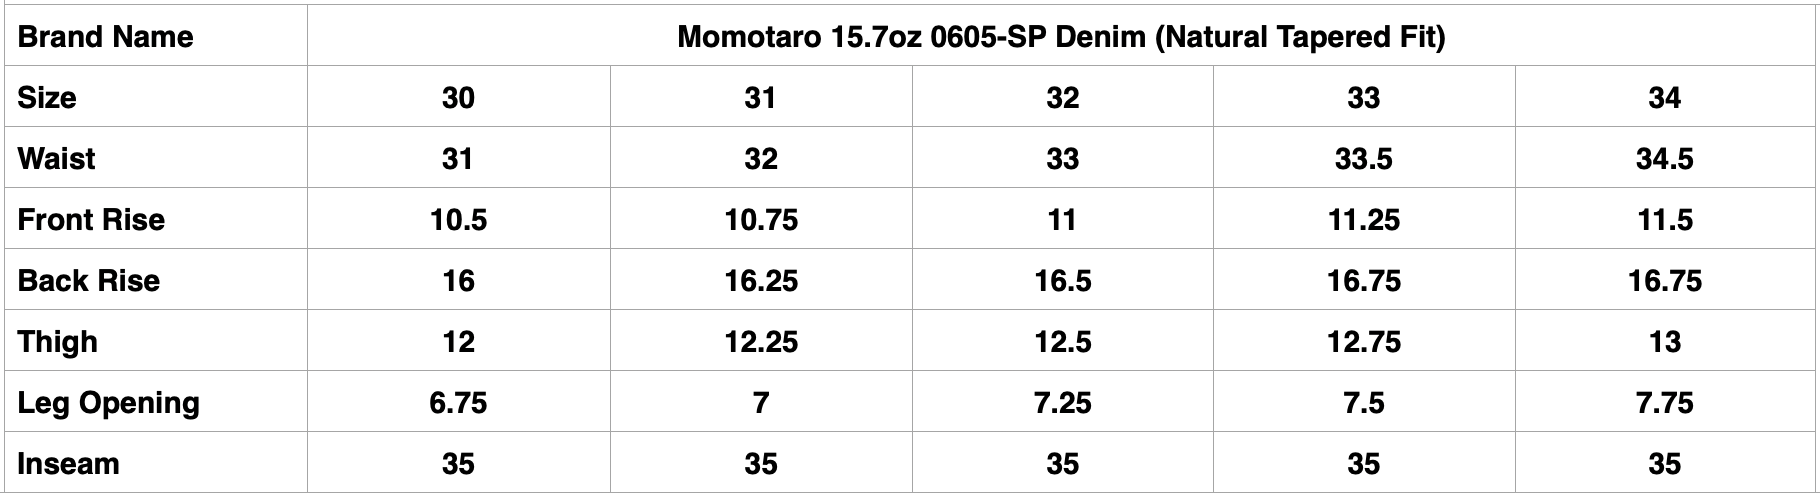 Momotaro 15.7oz 0605-SP Denim (Natural Tapered Fit)